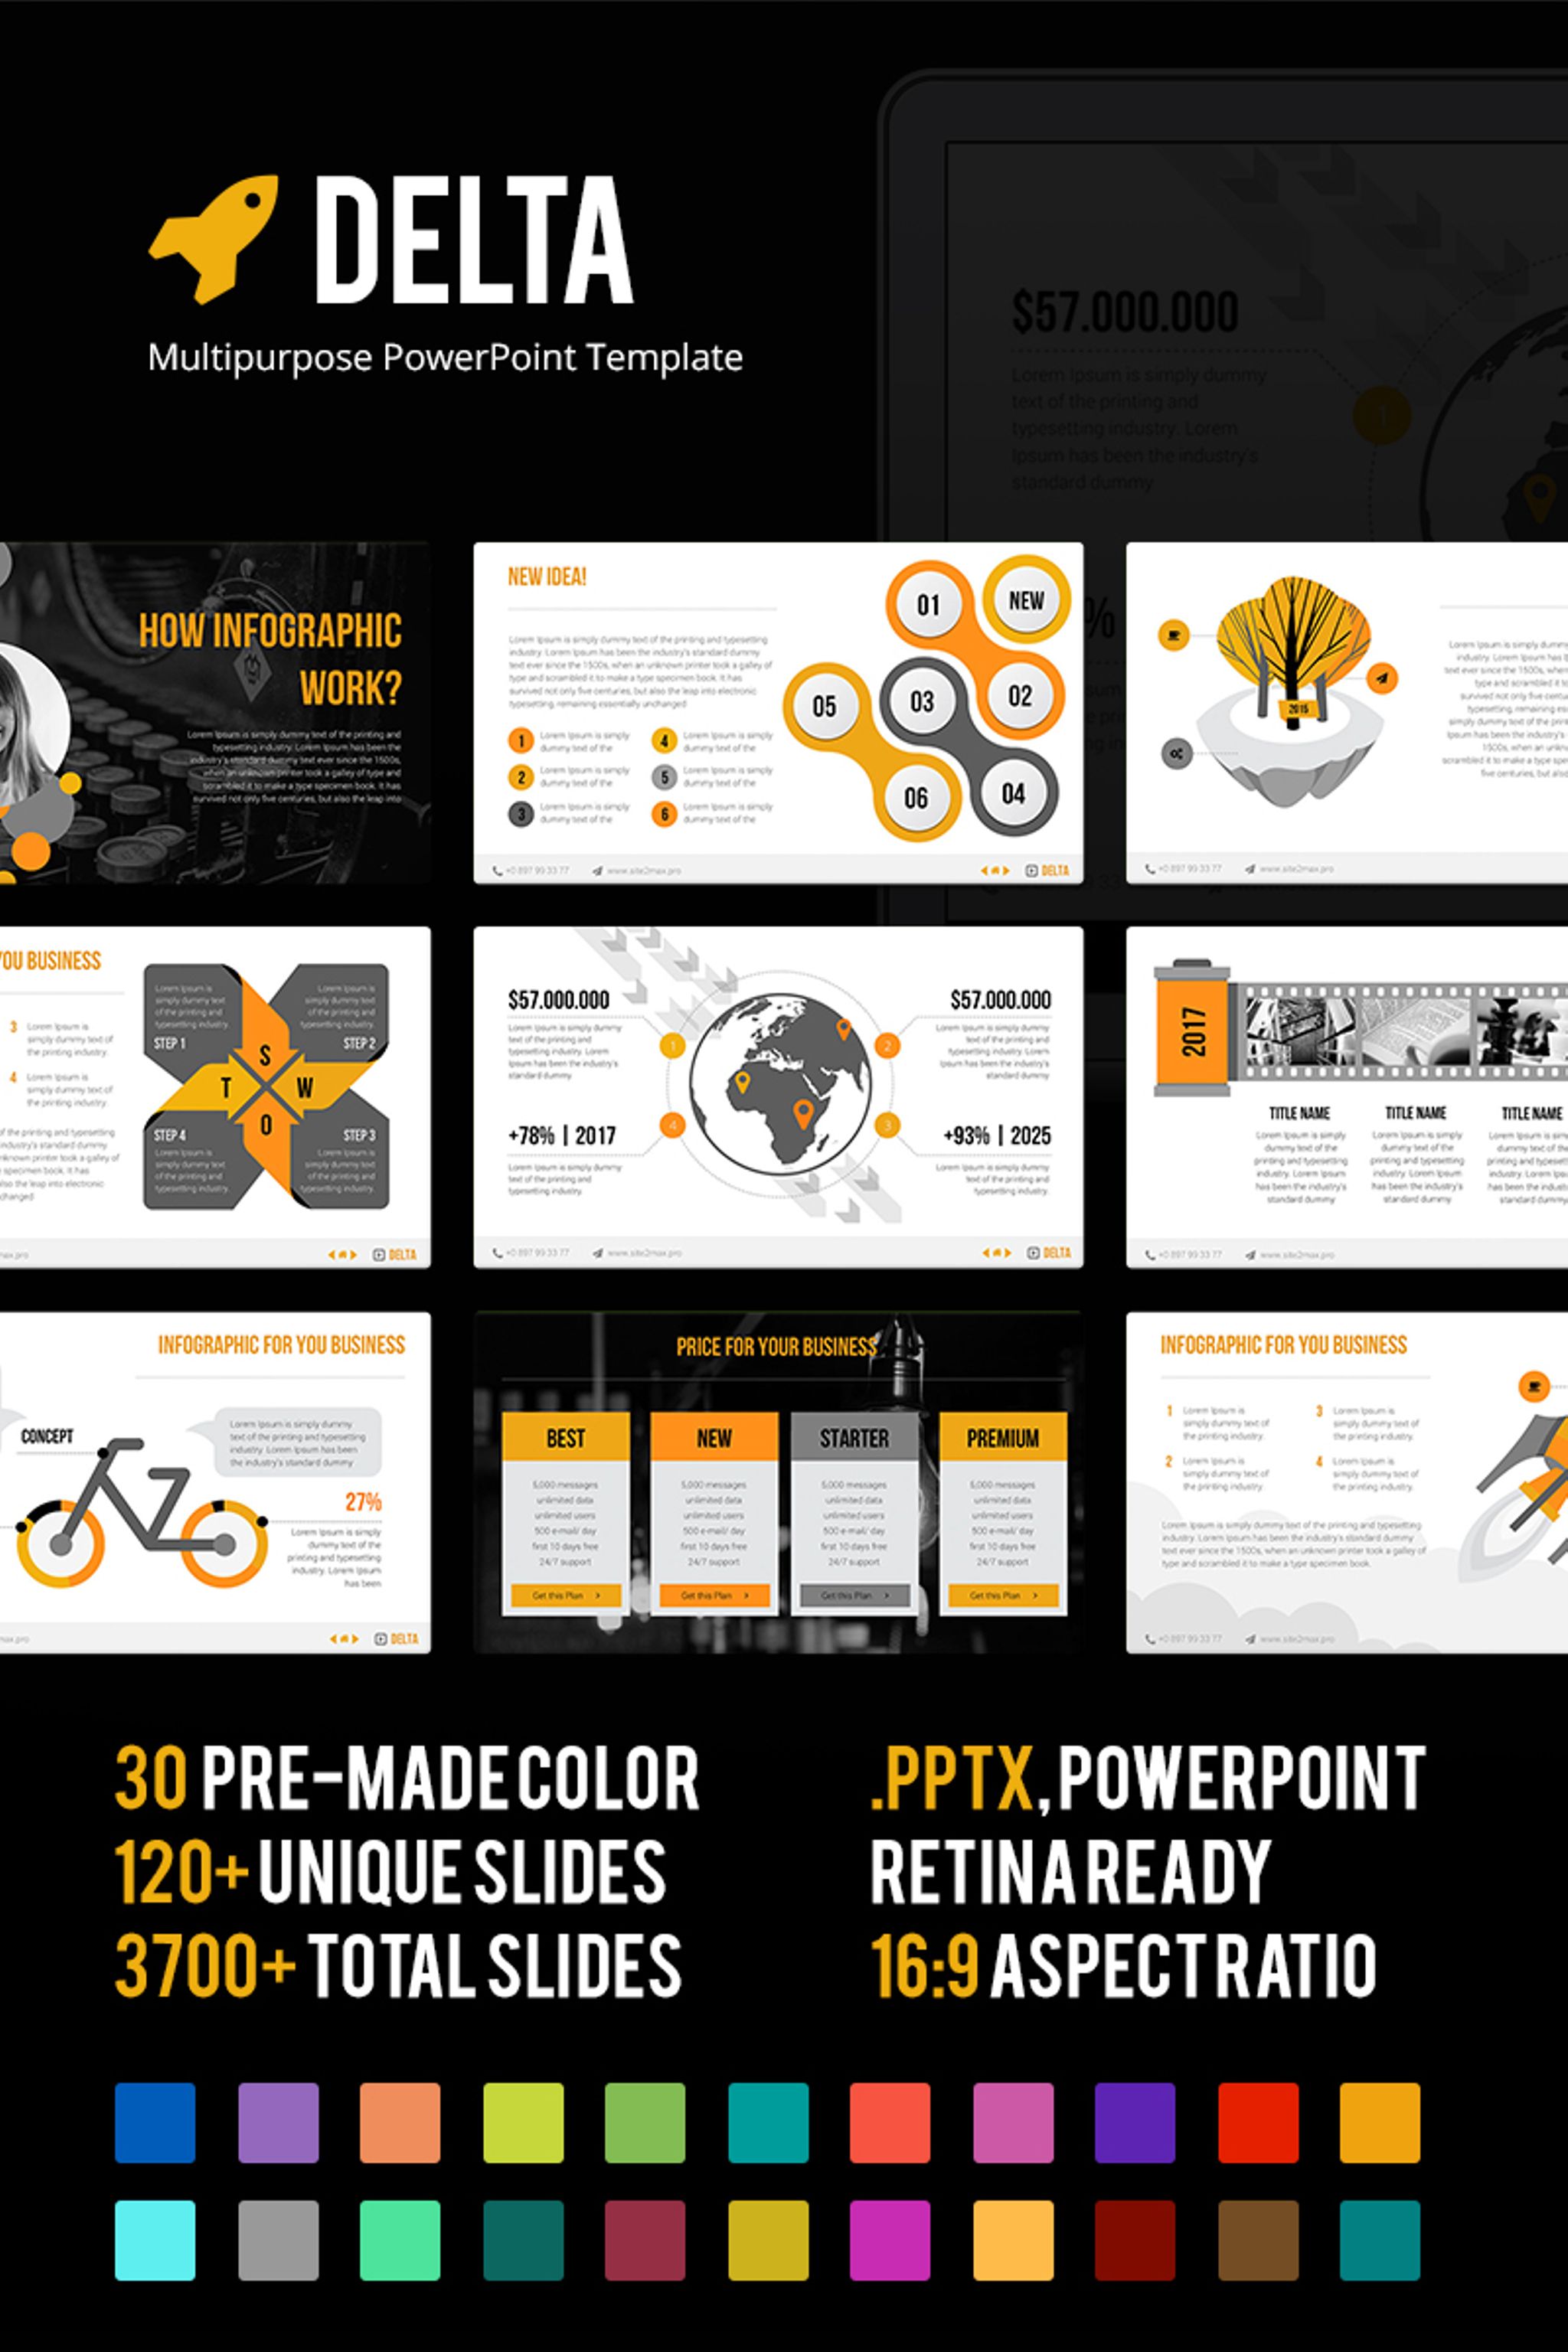 Delta Multipurpose PowerPoint template